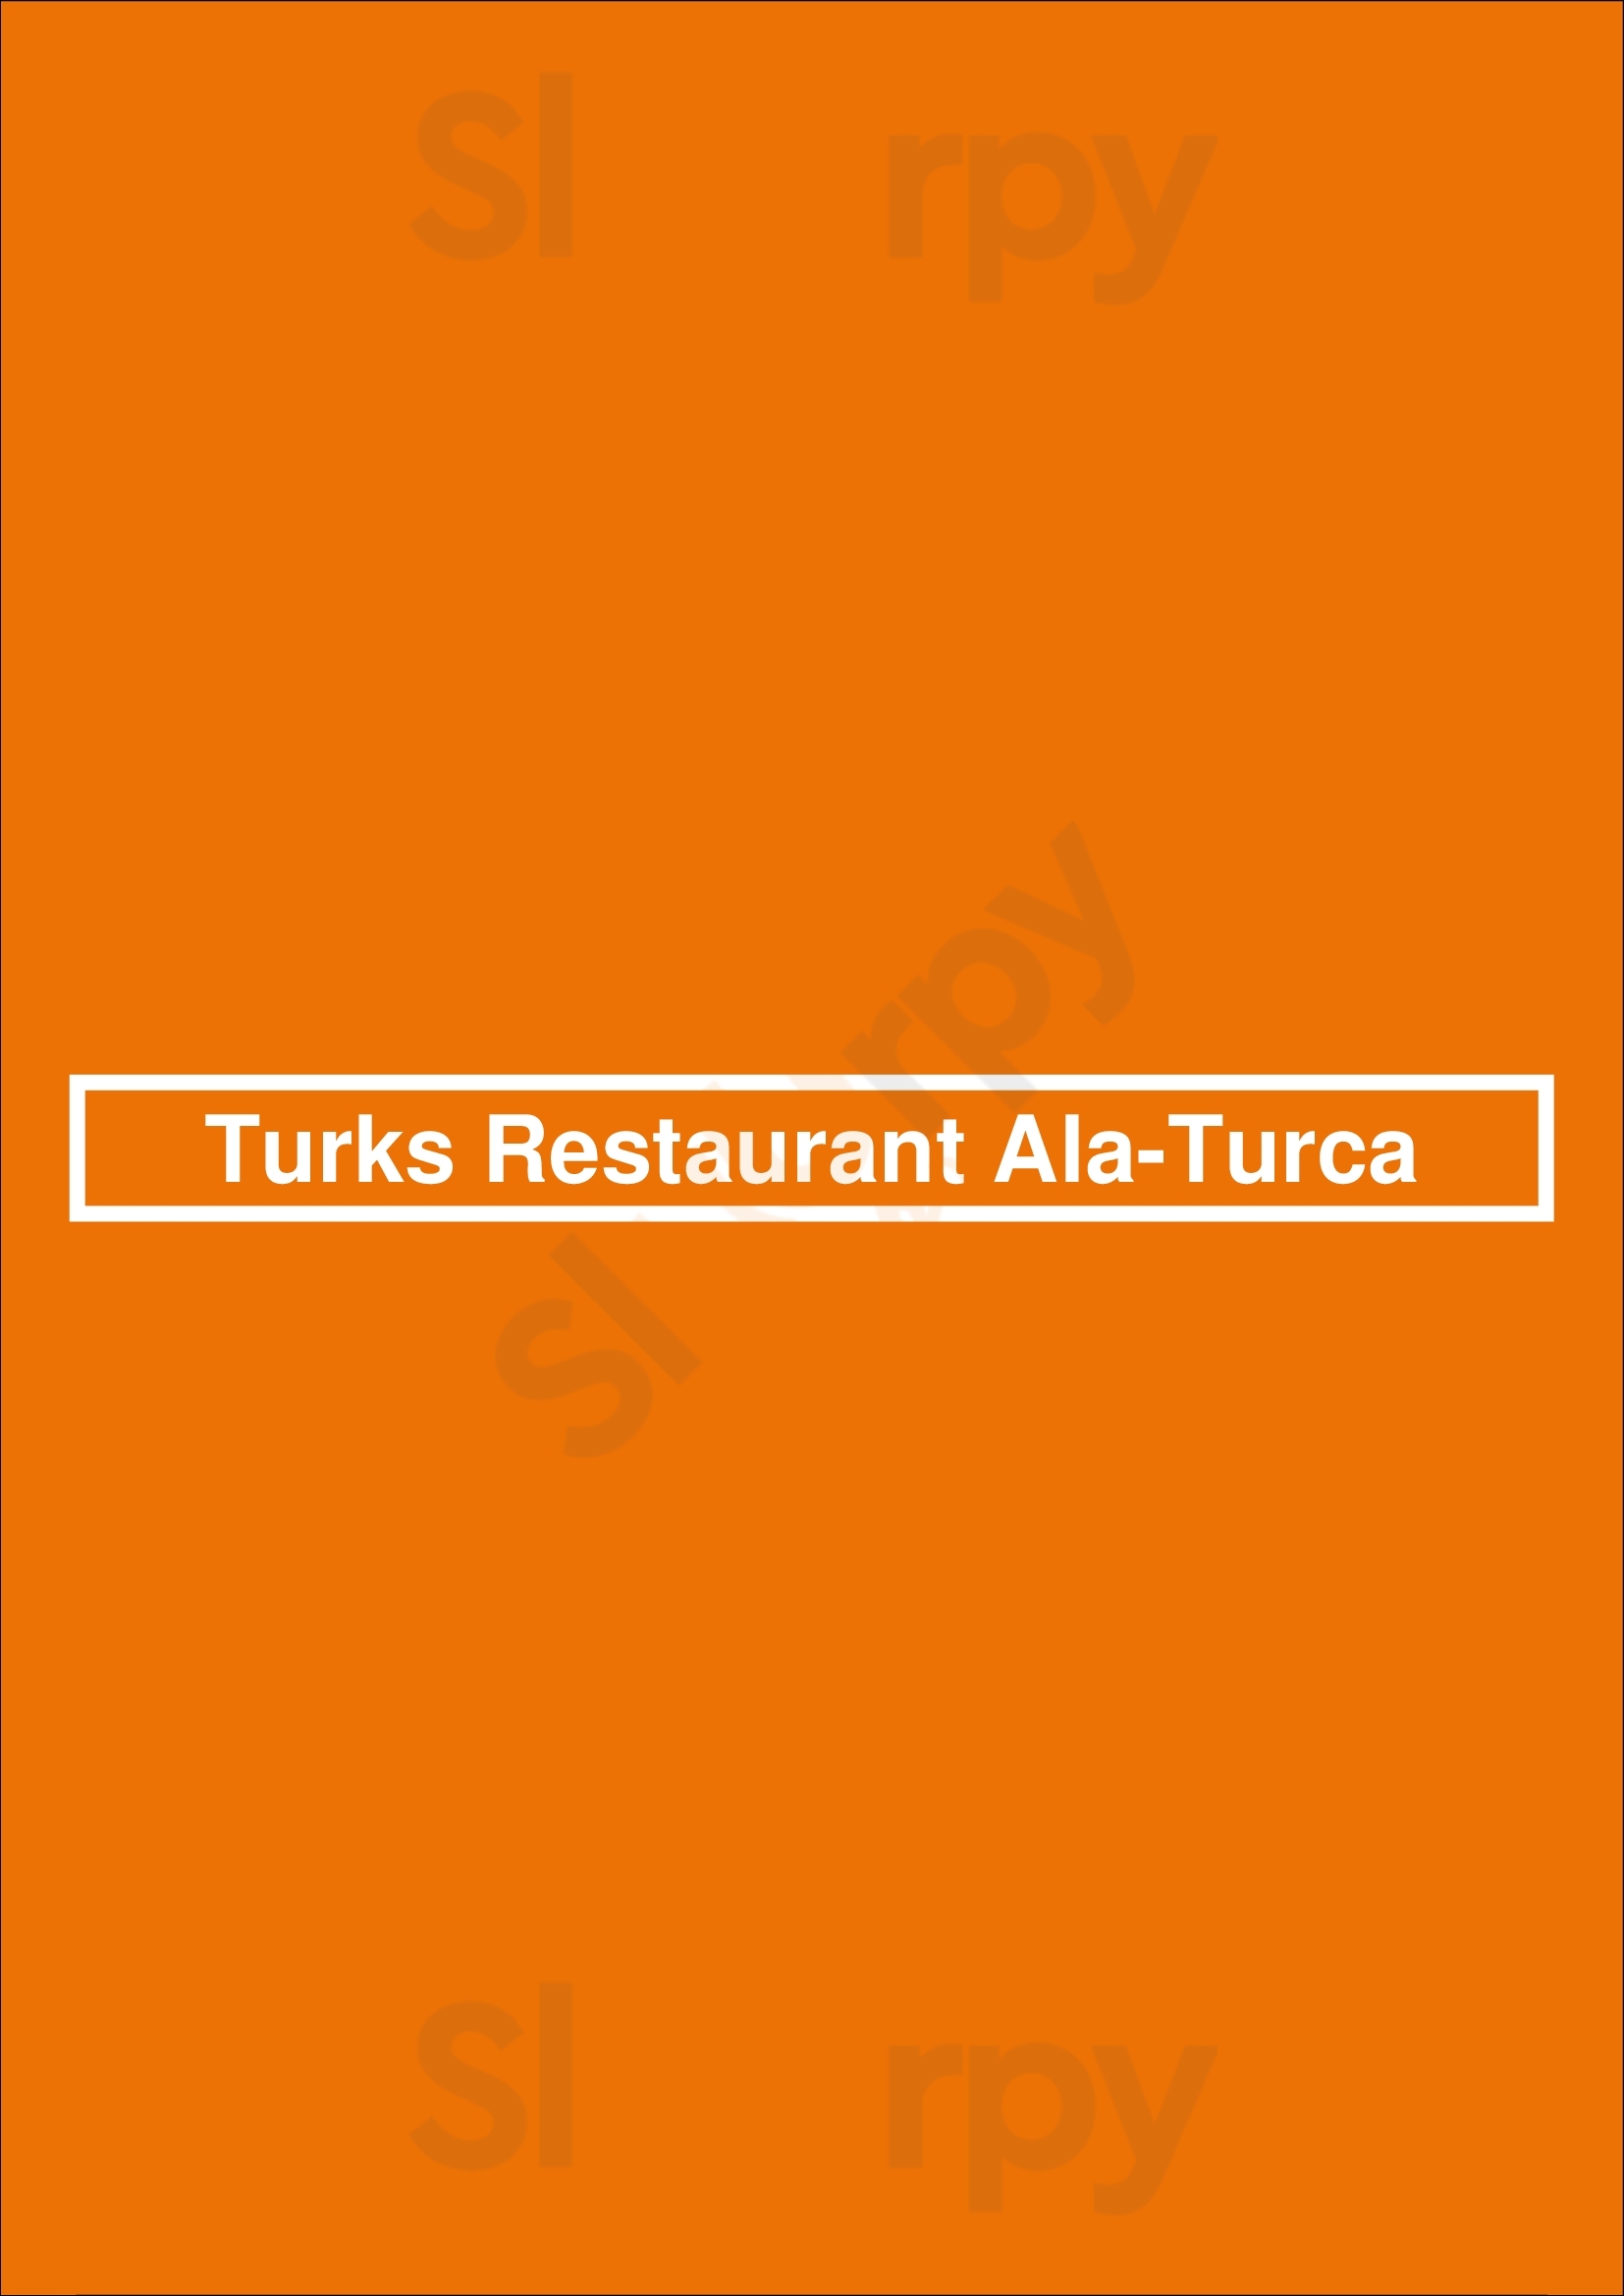 Turks Restaurant Ala-turca Cuijk Menu - 1